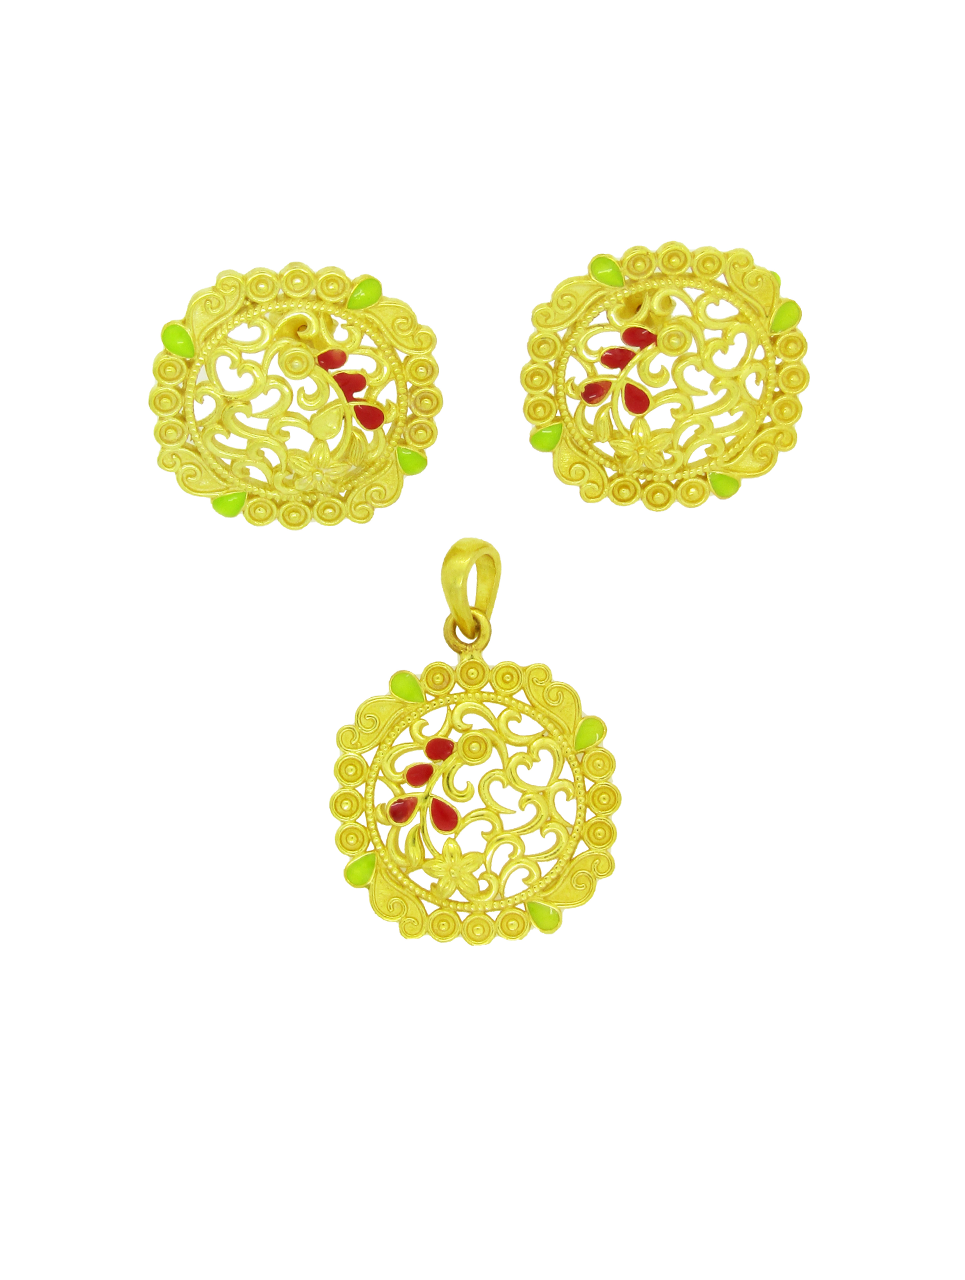 Buy quality Sparkling Moments Diamond Pendant & Earrings Set in Bardoli